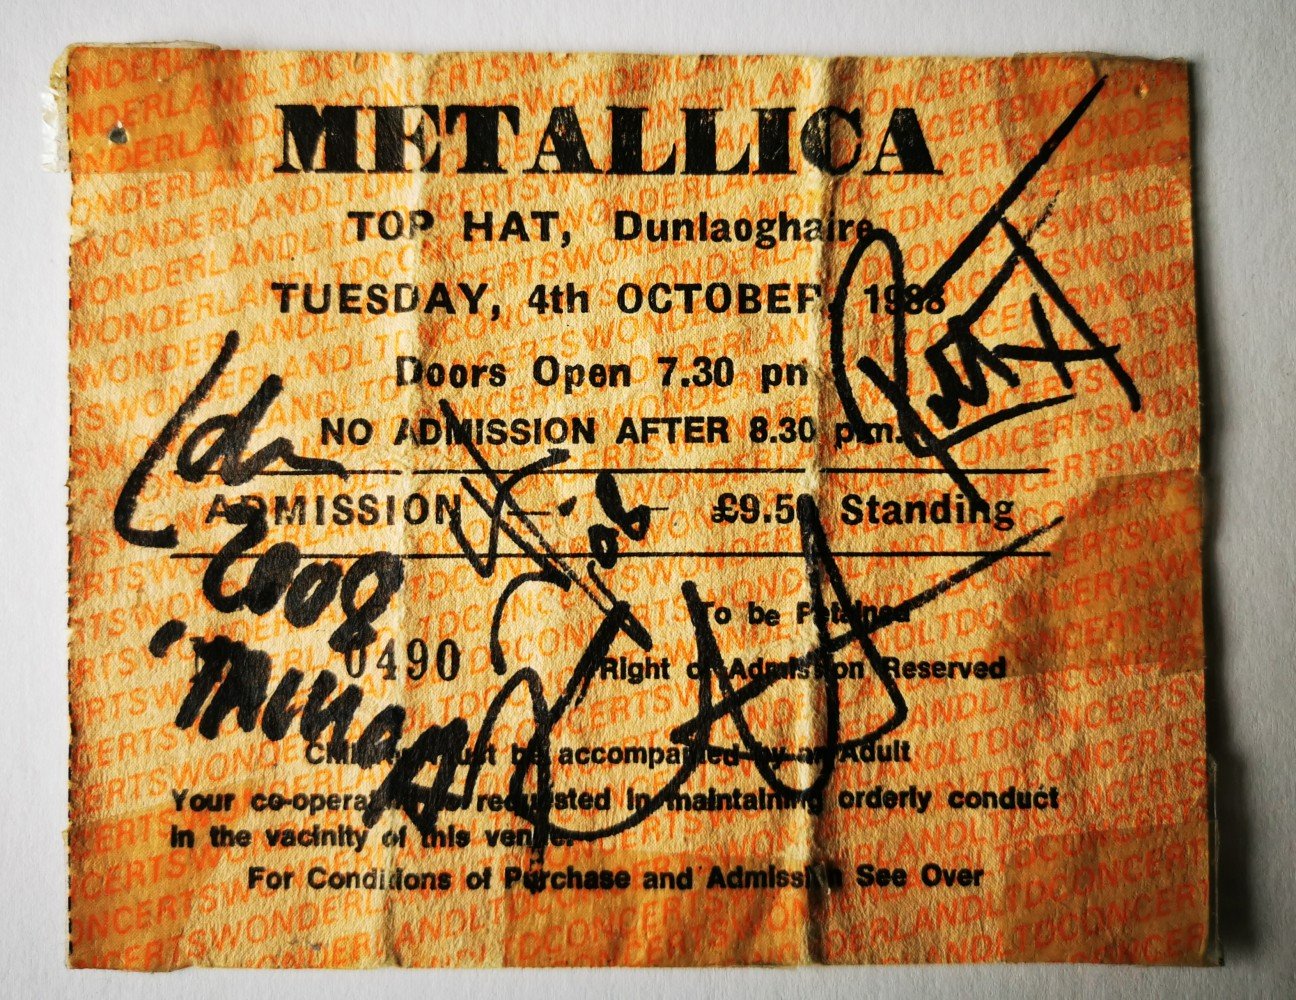 Metallica signed ticket courtesy of Carl Prenter